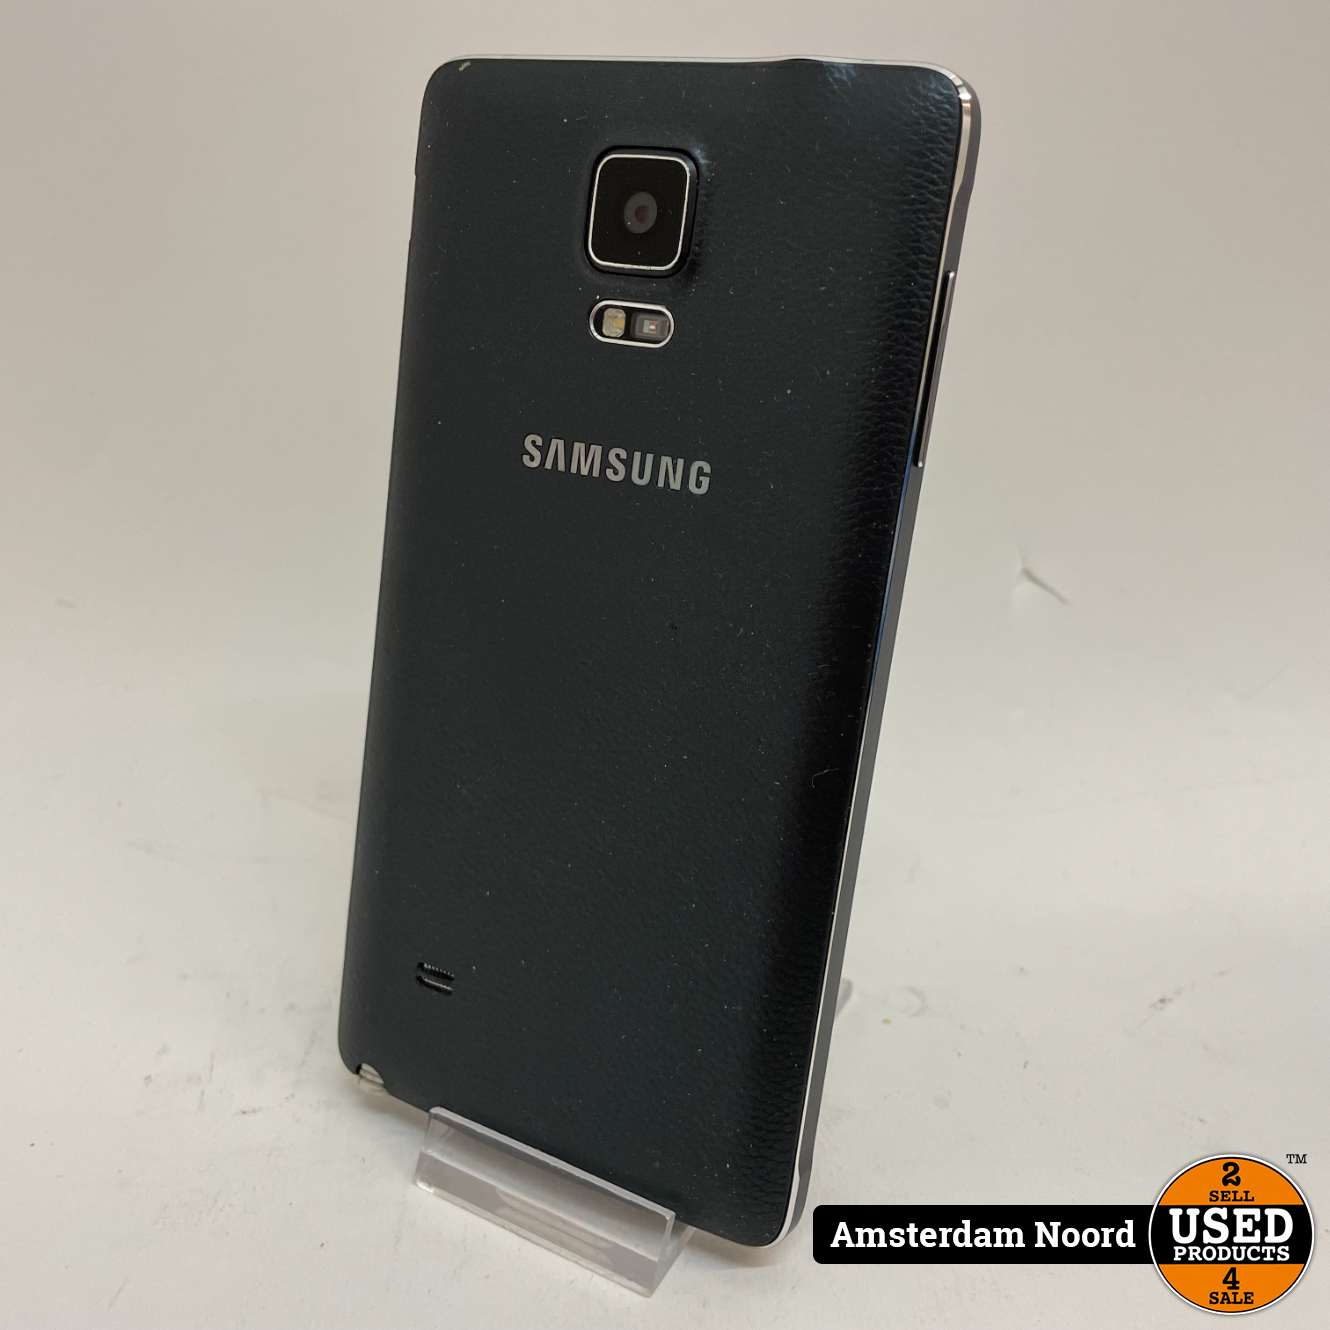 Samsung Galaxy Note 4 32GB Used Amsterdam Noord